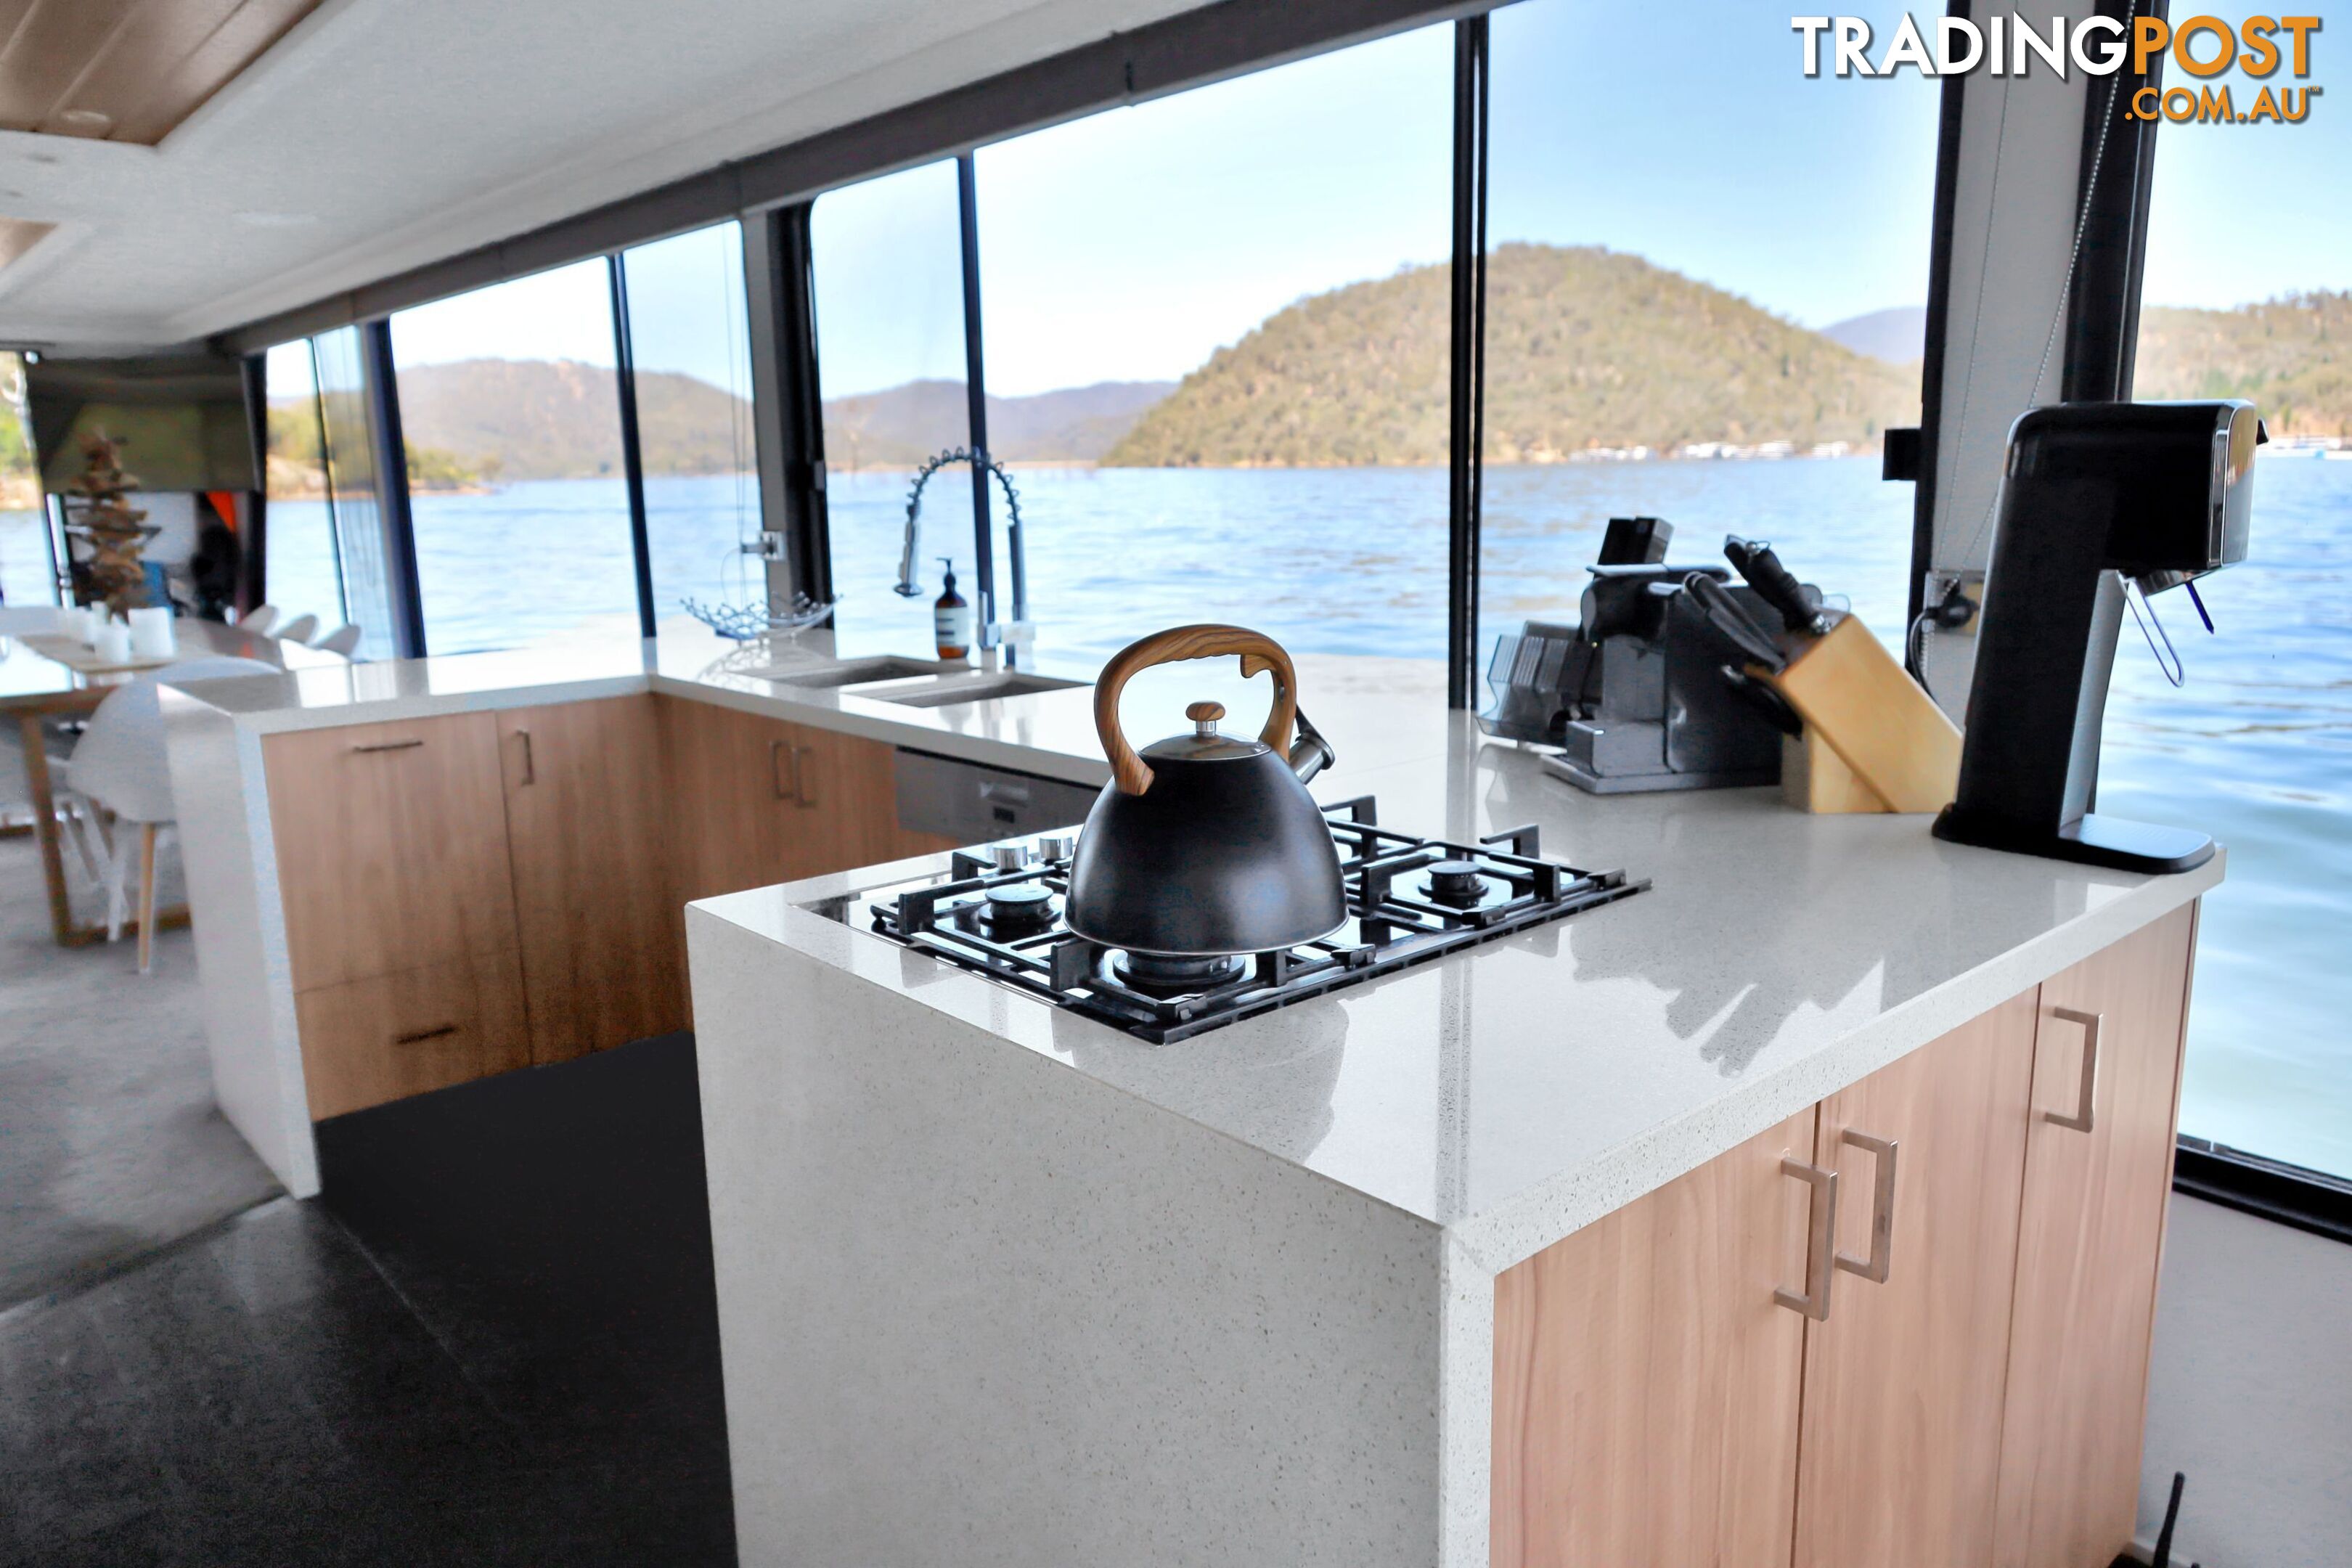 PowerPlay Houseboat Holiday Home on Lake Eildon